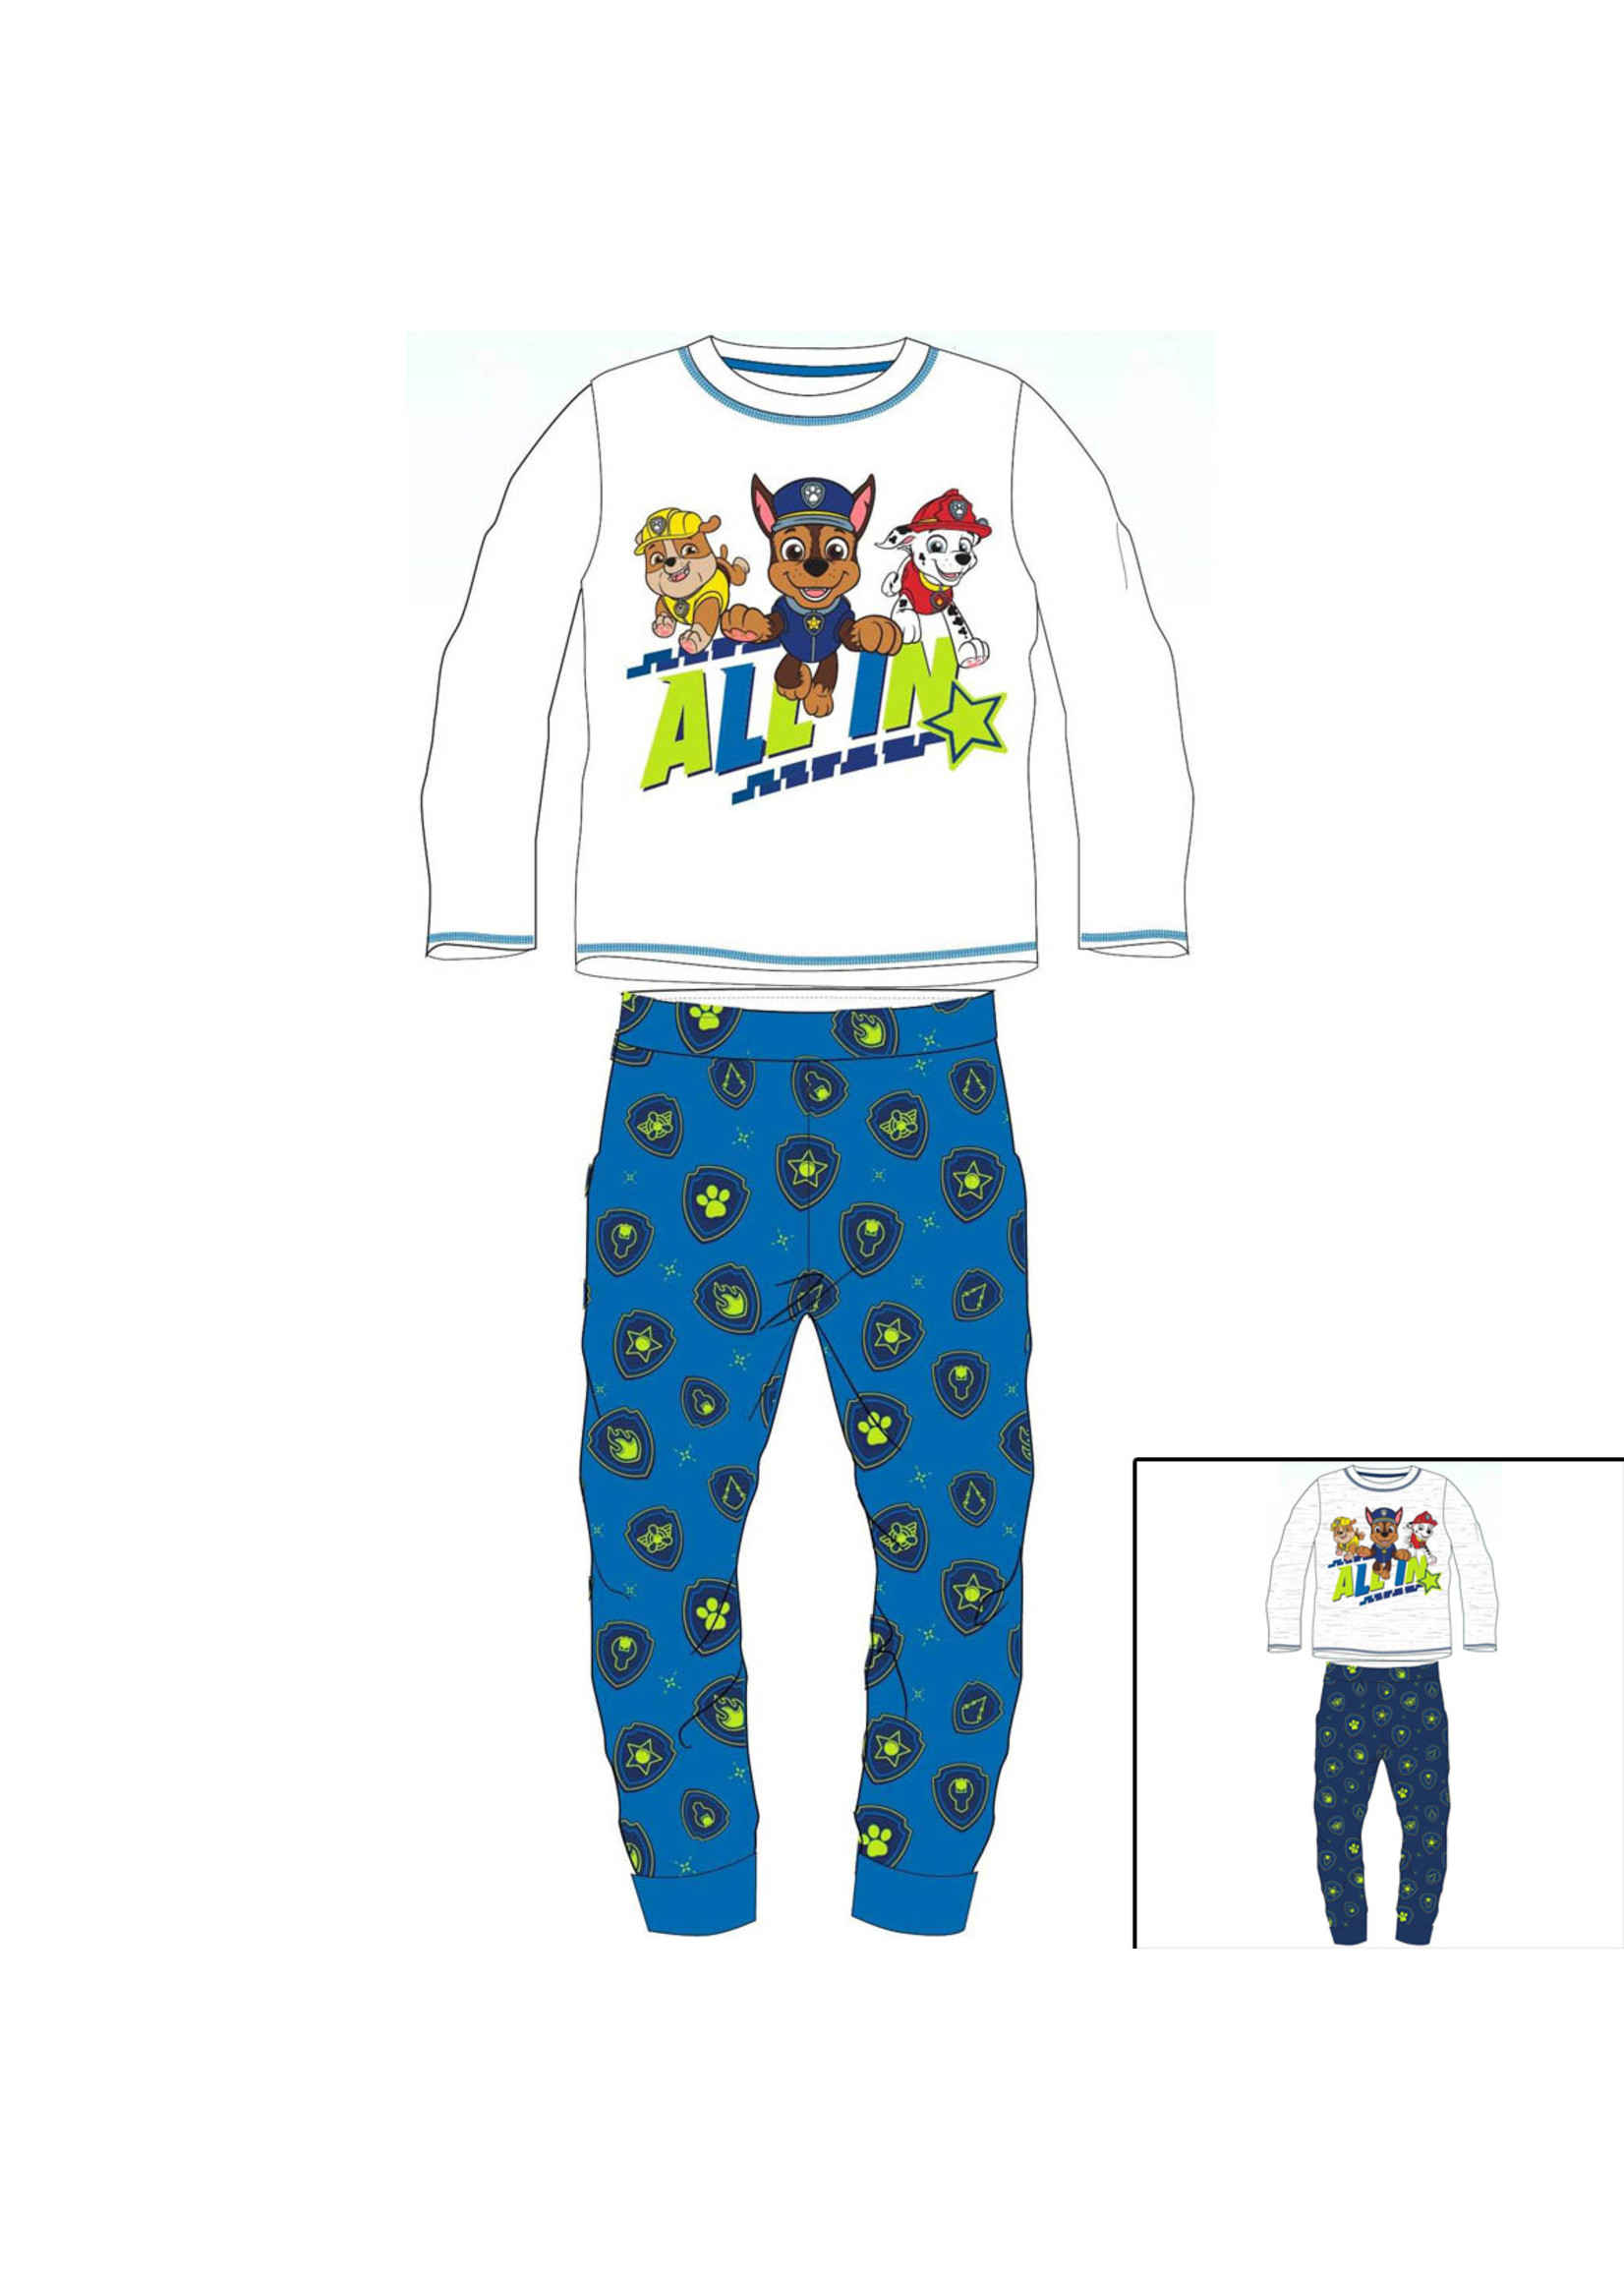 Nickelodeon Paw Patrol Pajamas from Nickelodeon white-blue